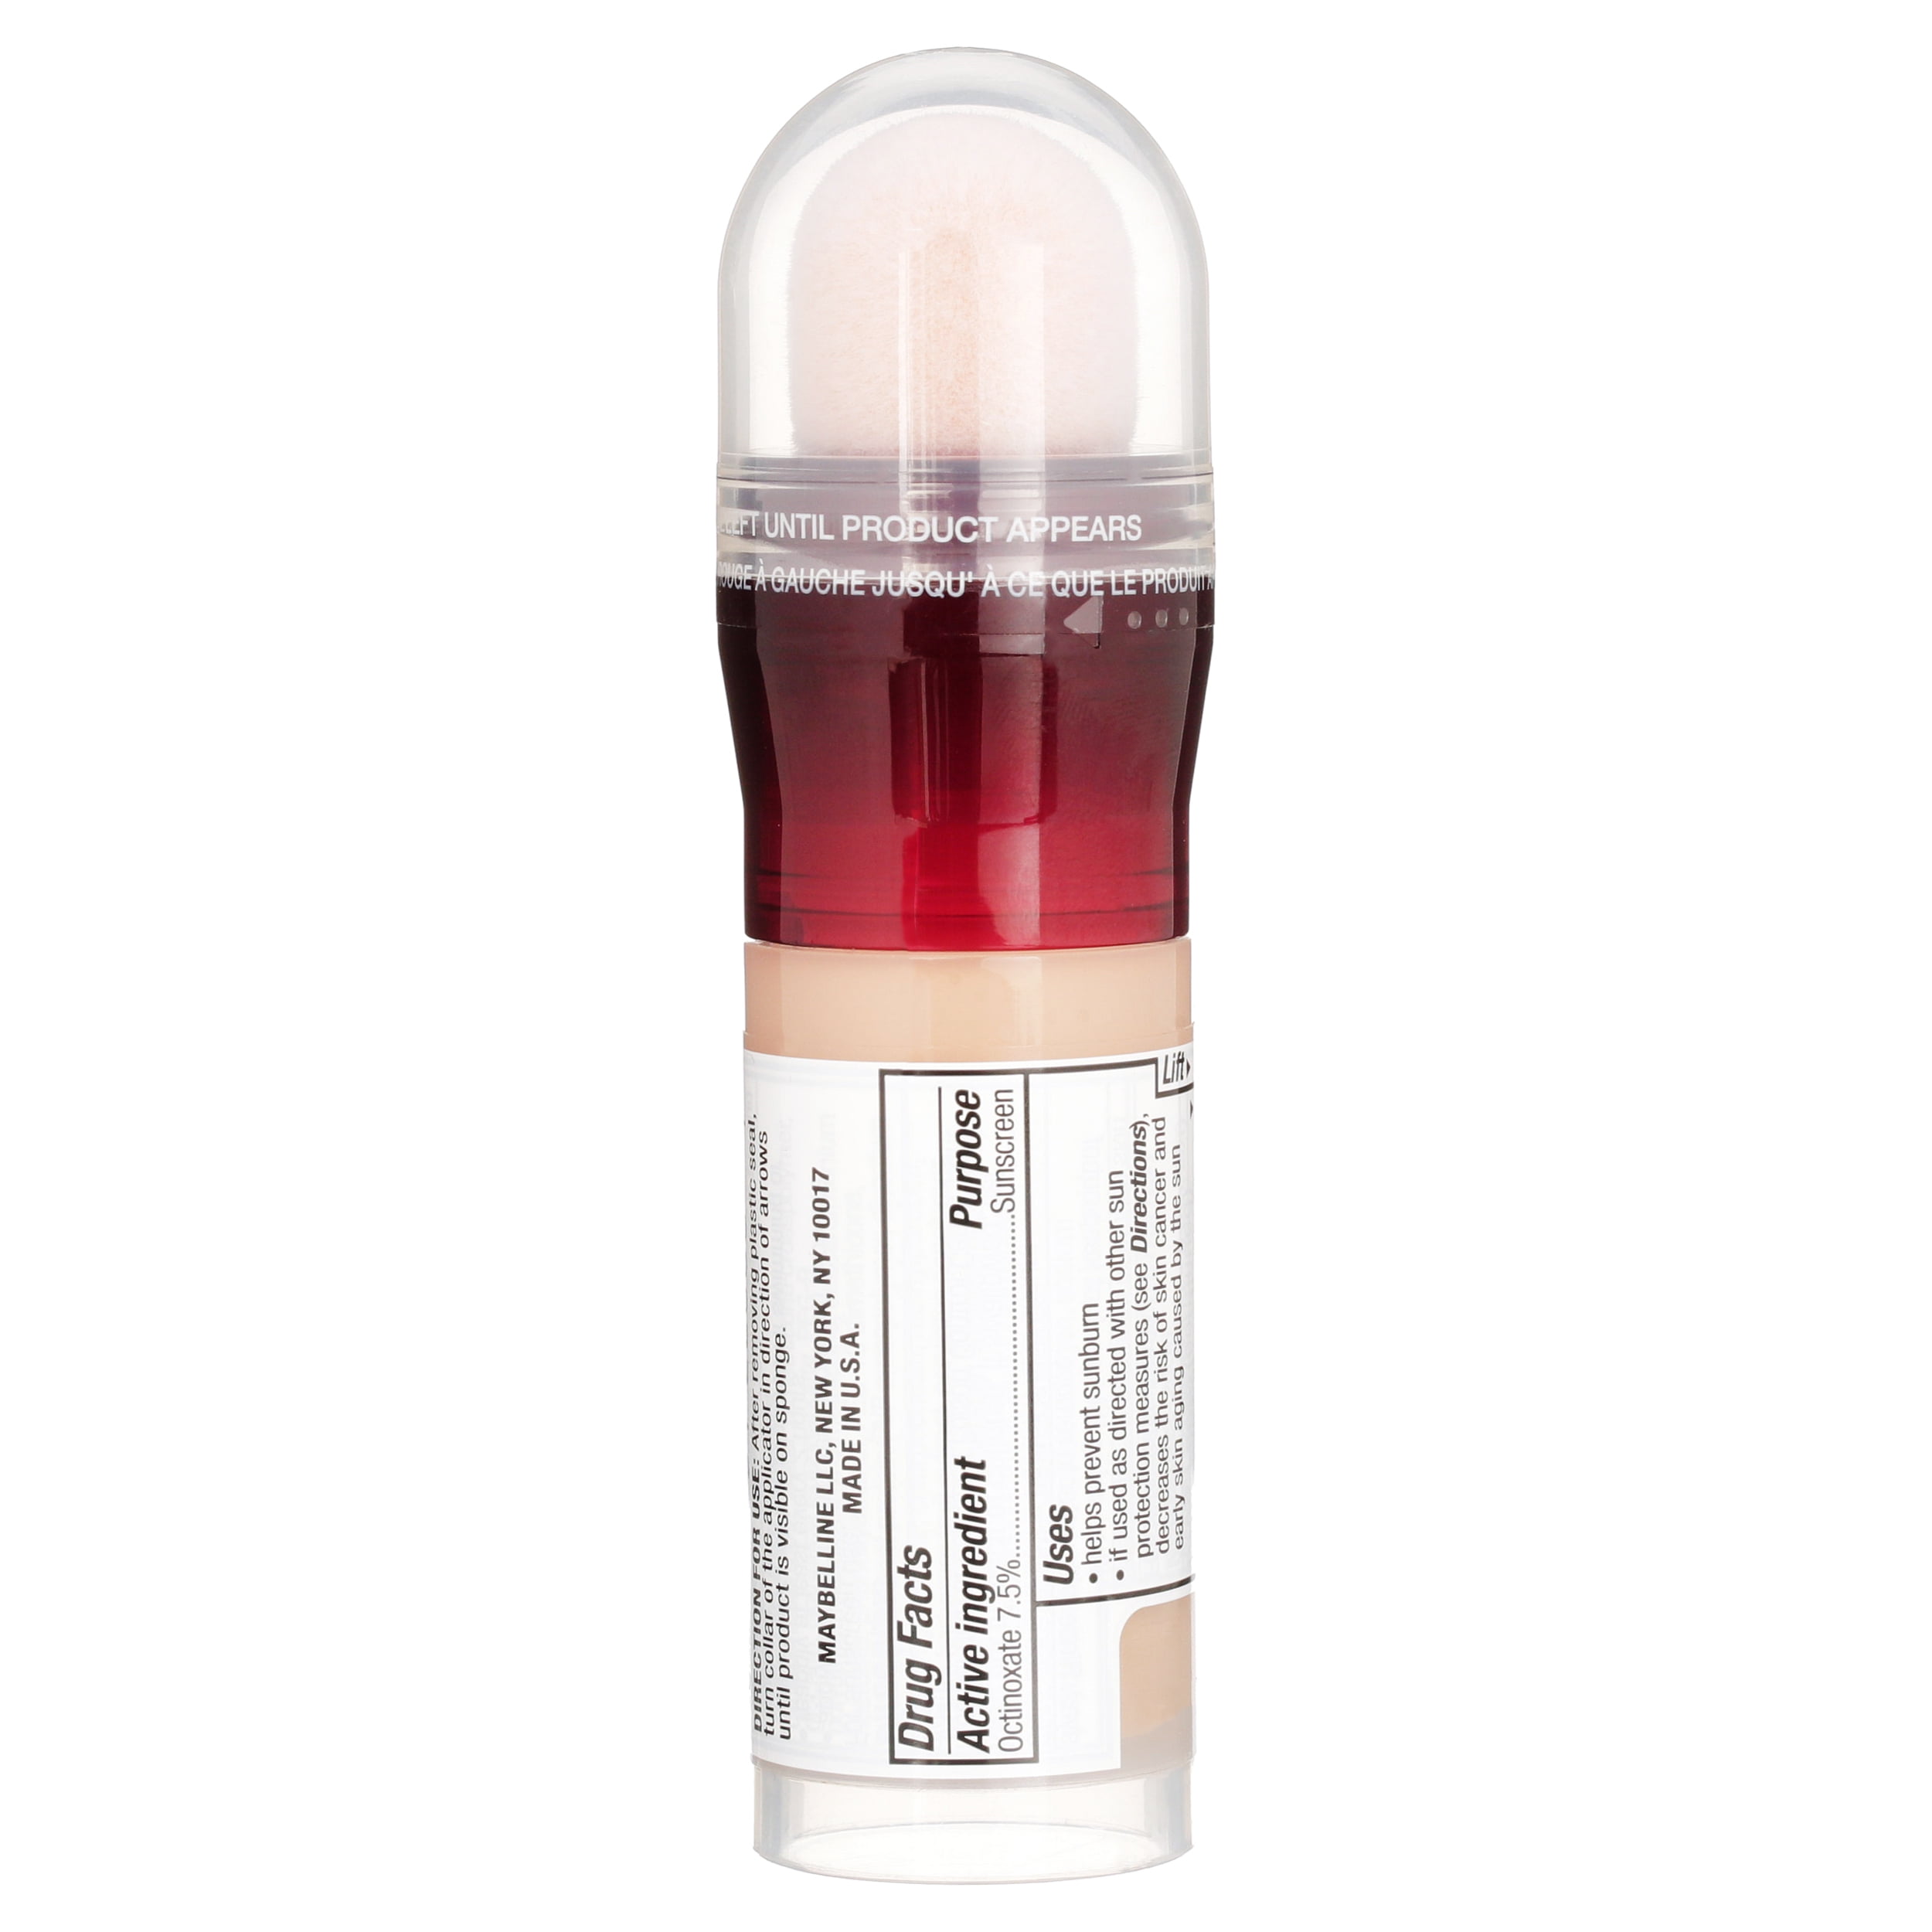 SPF 18, Ivory, Rewind Maybelline Treatment Instant Makeup, oz Eraser Classic fl Age 0.68